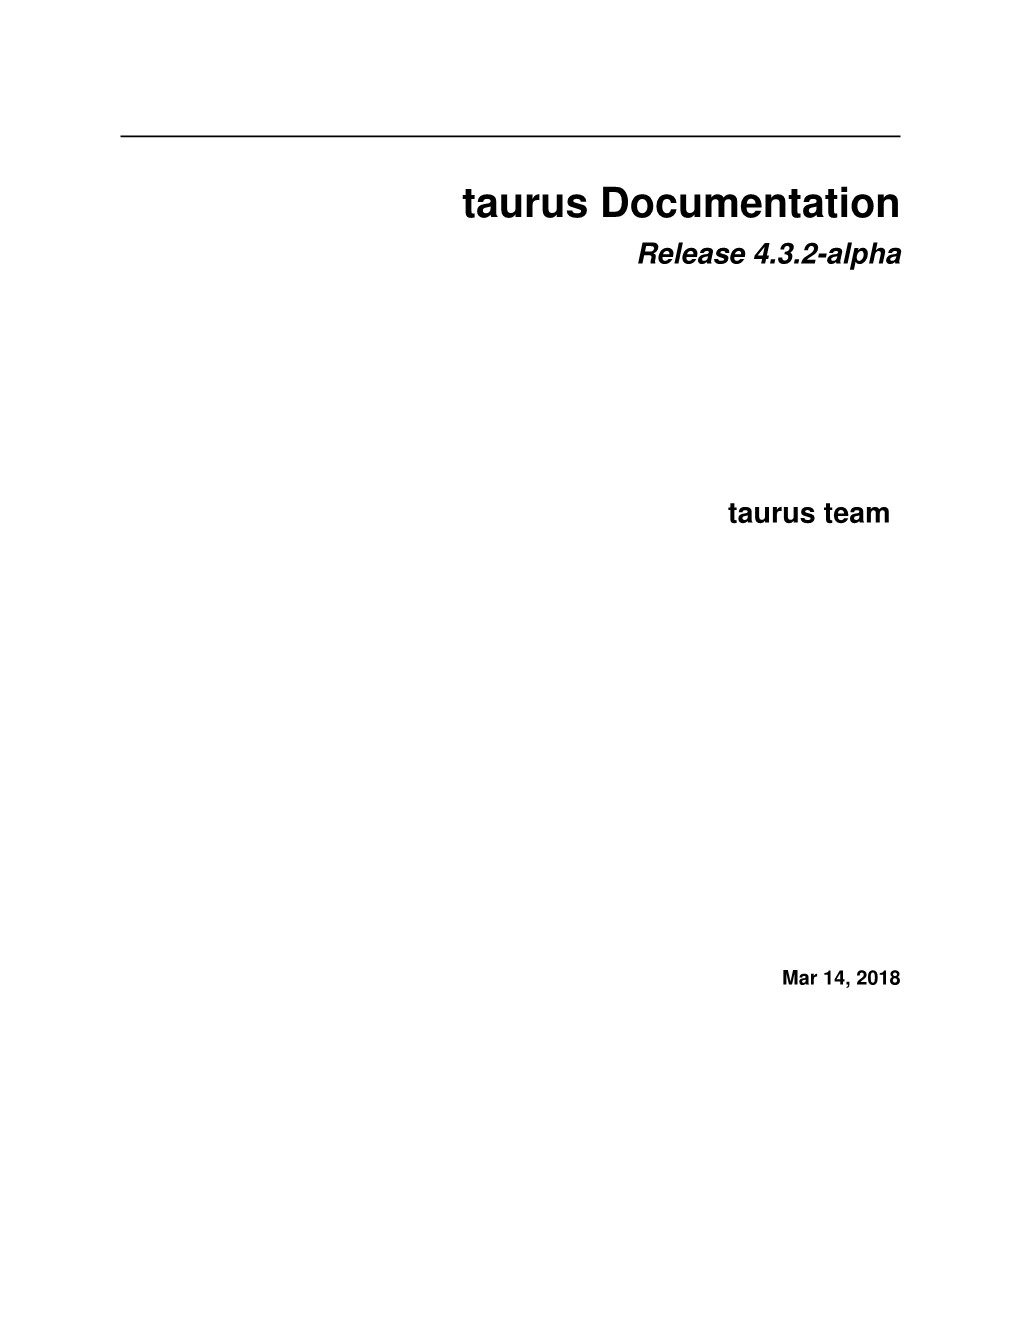 Taurus Documentation Release 4.3.2-Alpha